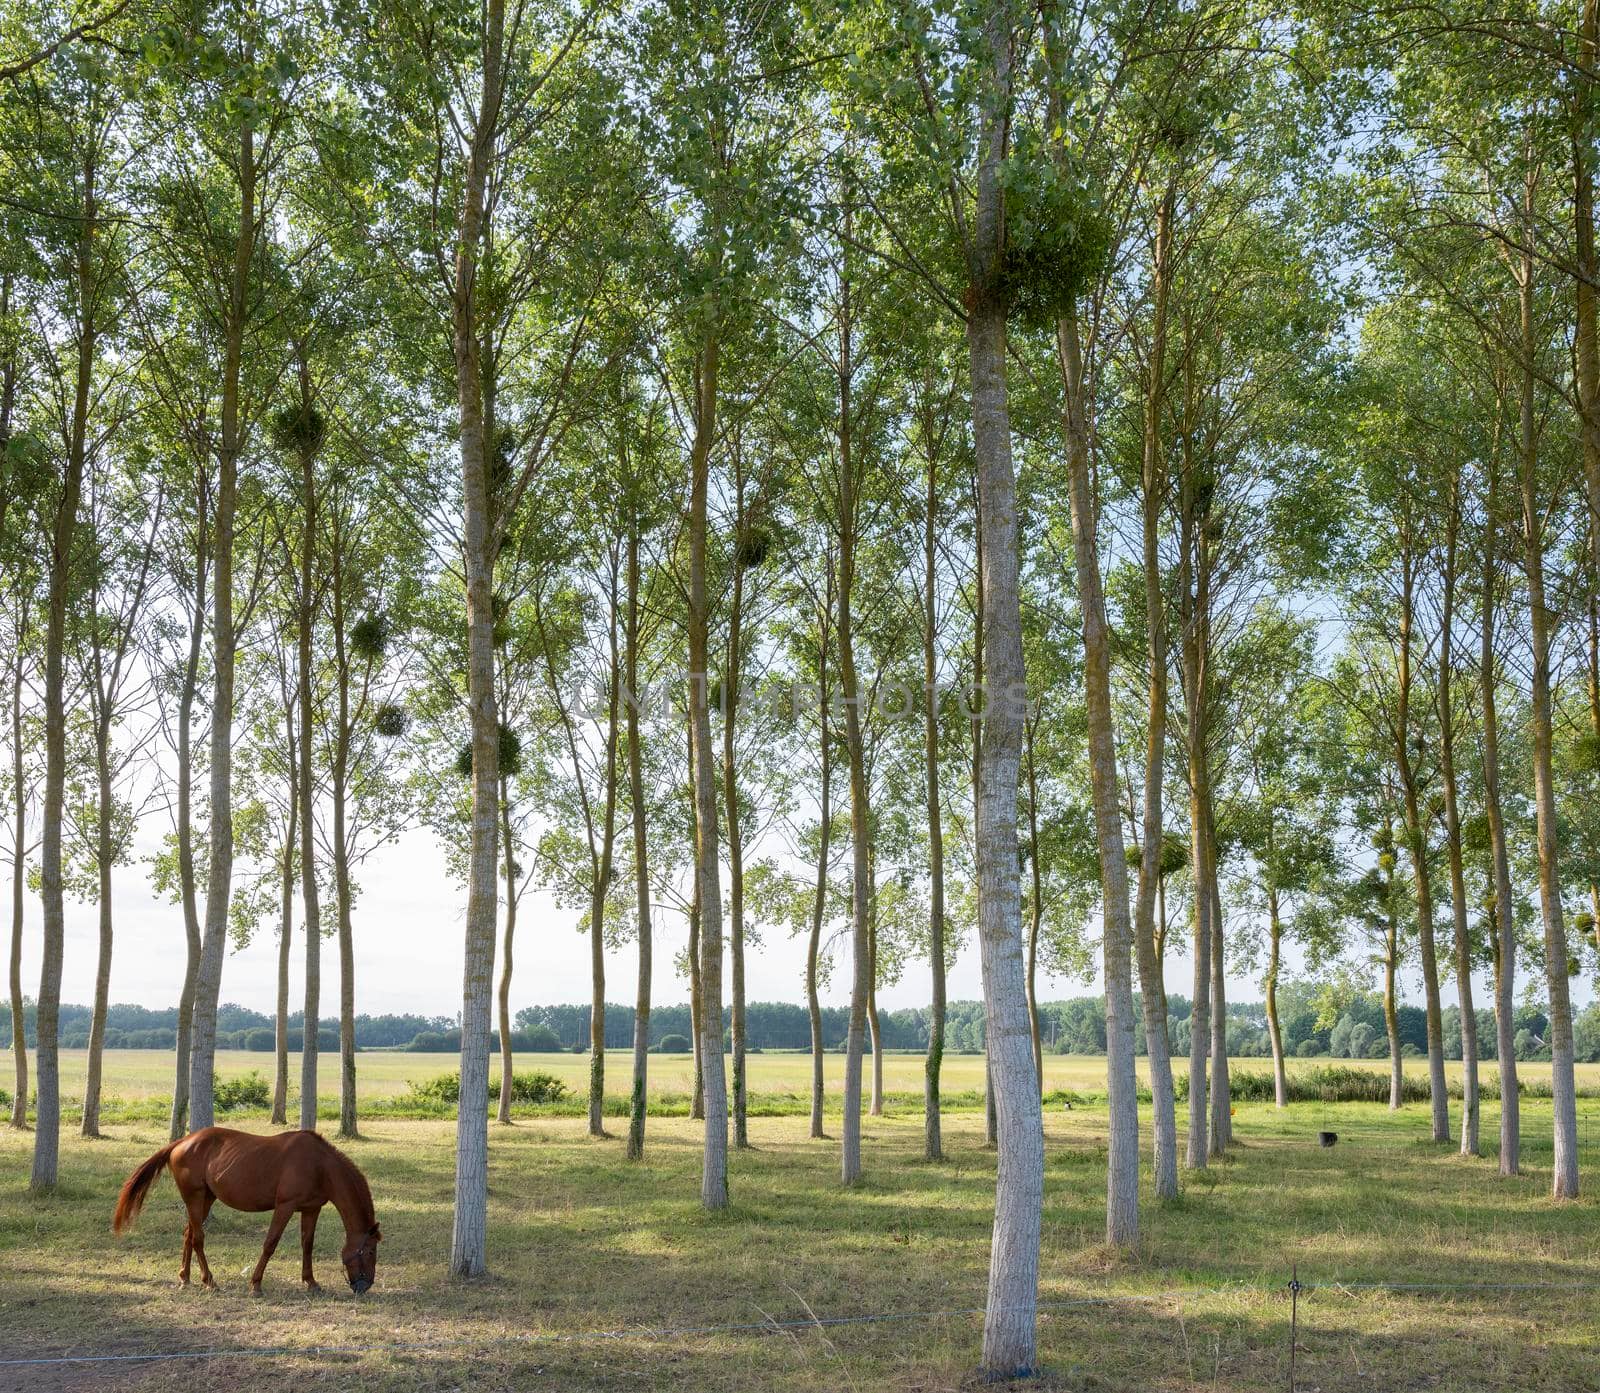 horse between trunks of poplar trees in Parc naturel regional Loire-Anjou-Touraine in france